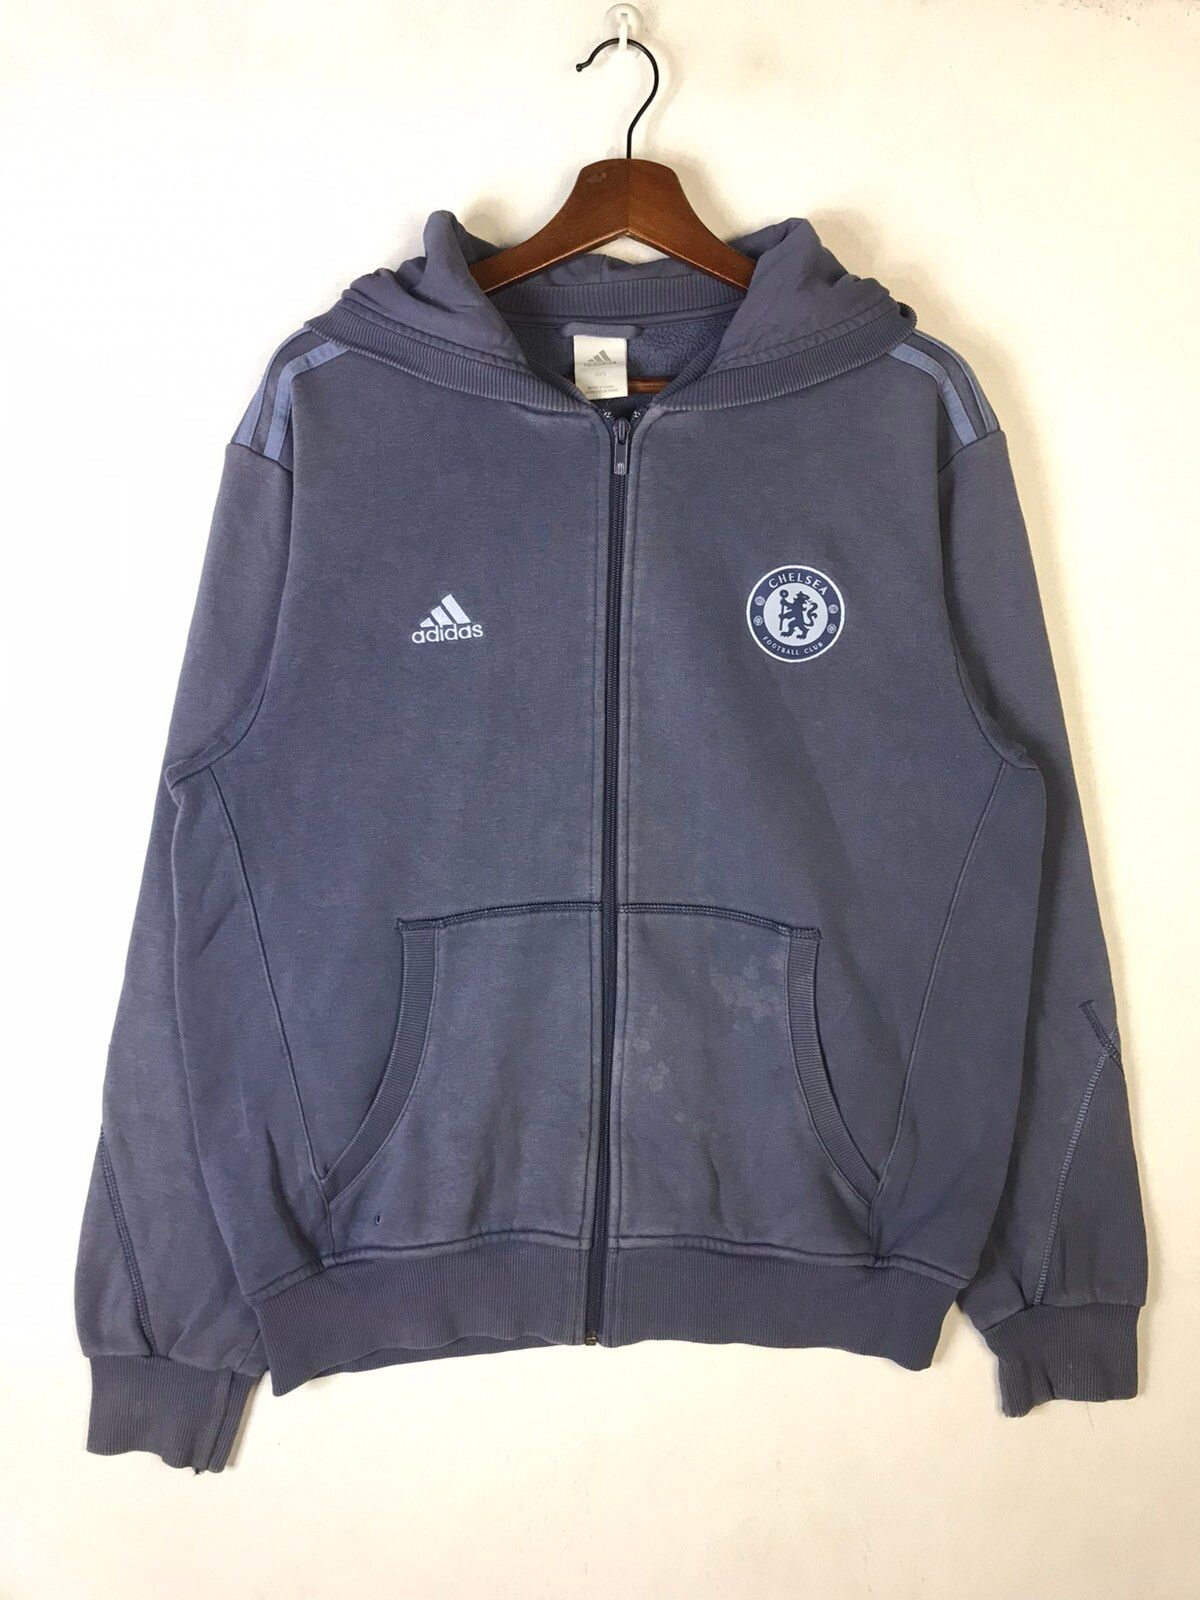 Adidas Adidas x Chelsea FC Zipper Hoodie Sweater Size US M / EU 48-50 / 2 - 2 Preview